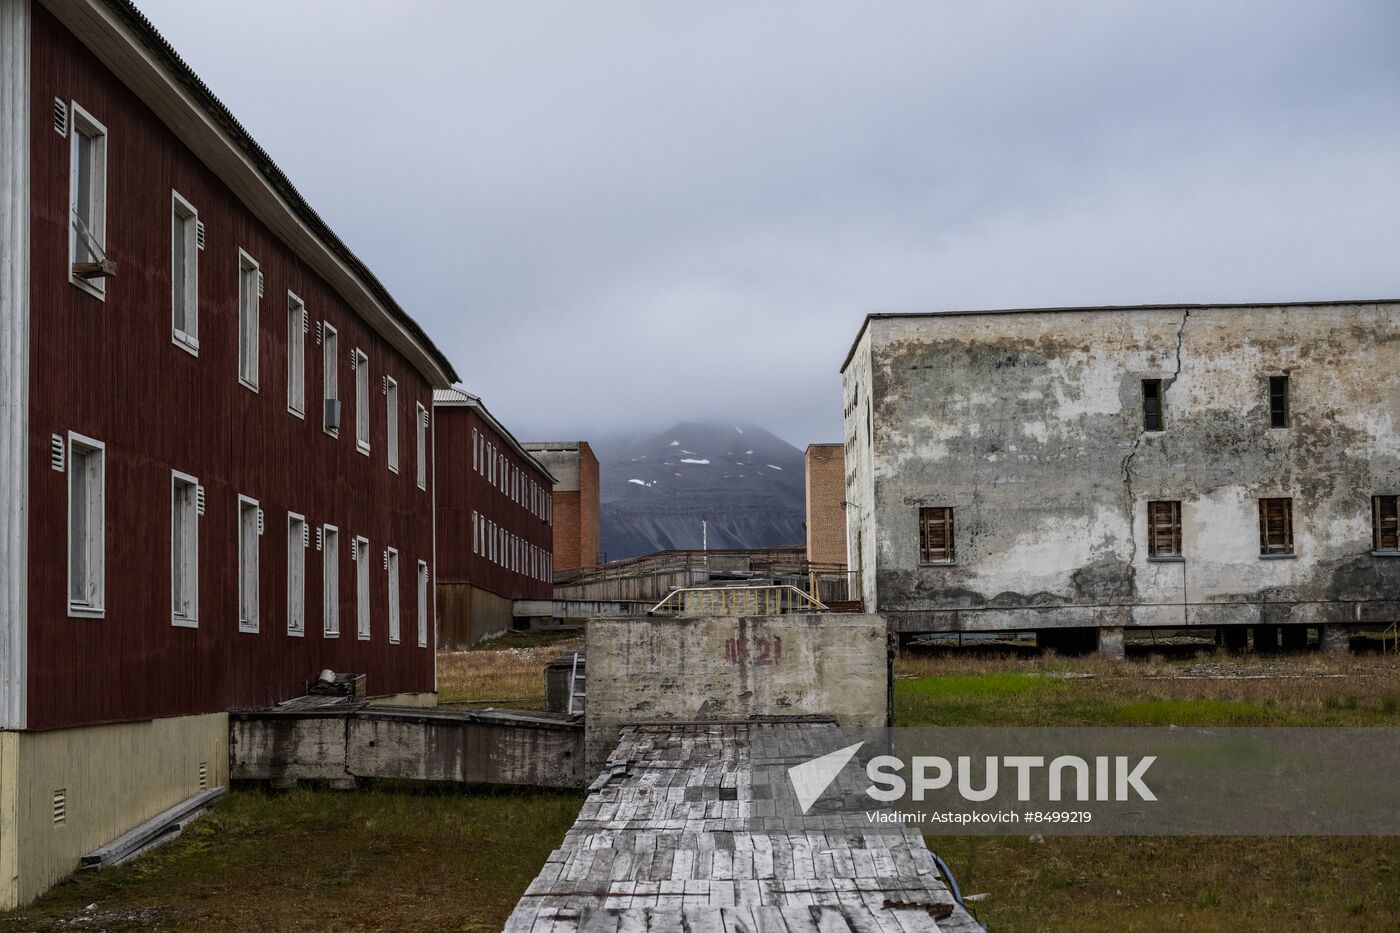 Norway Svalbard Archipelago Pyramiden Settlement